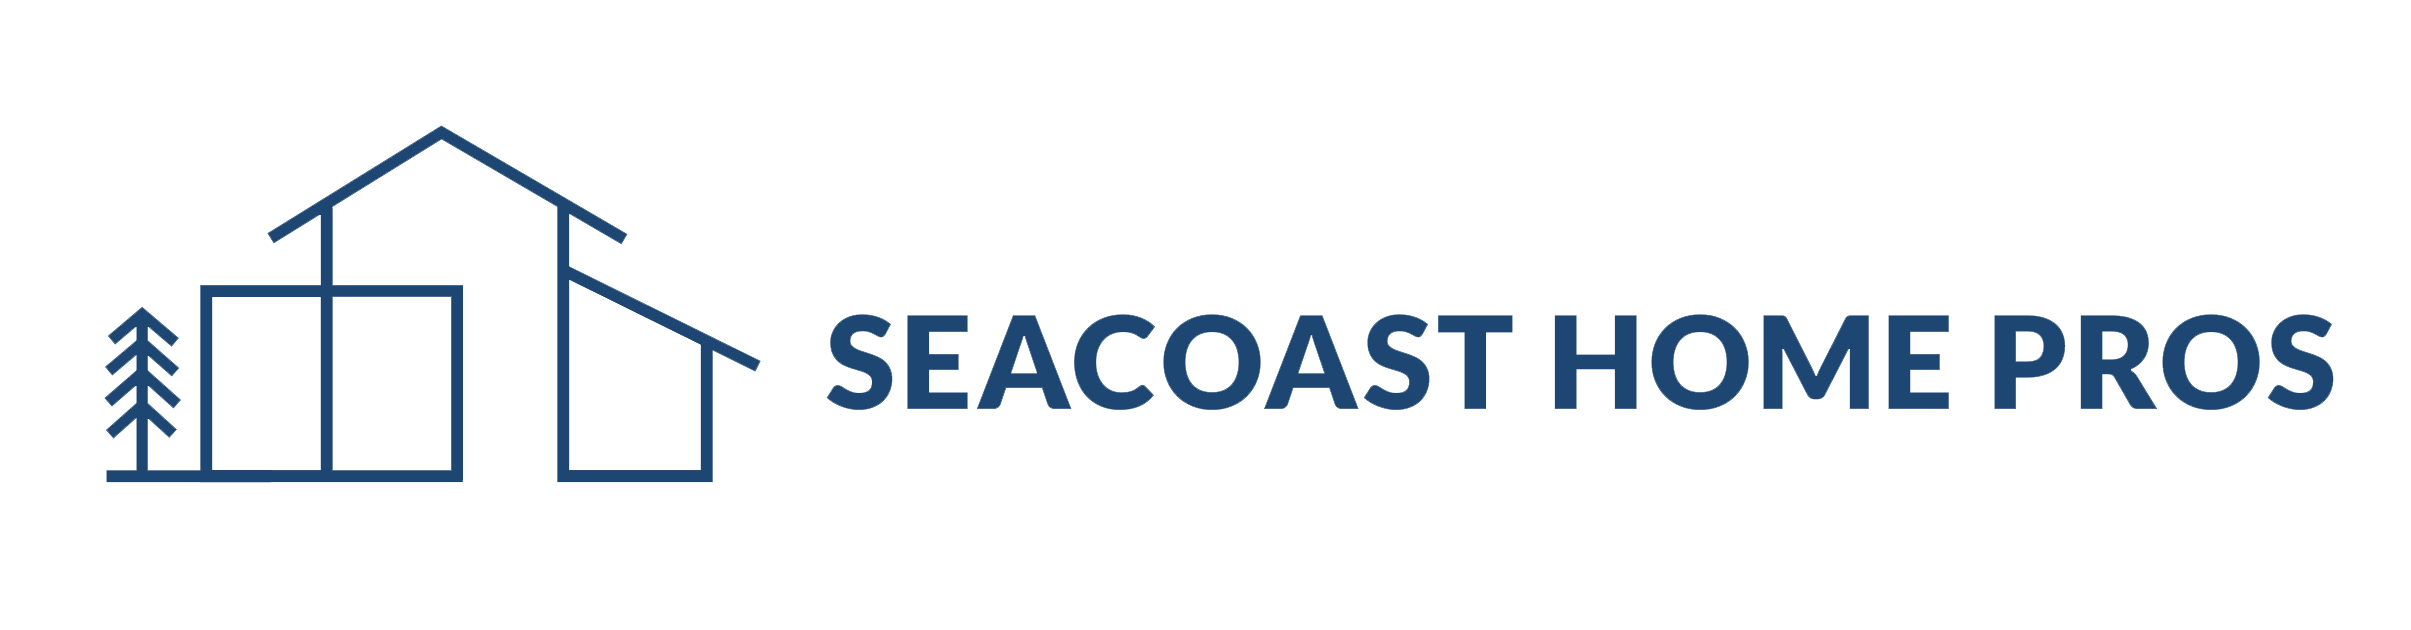 Seacoast Home Pros